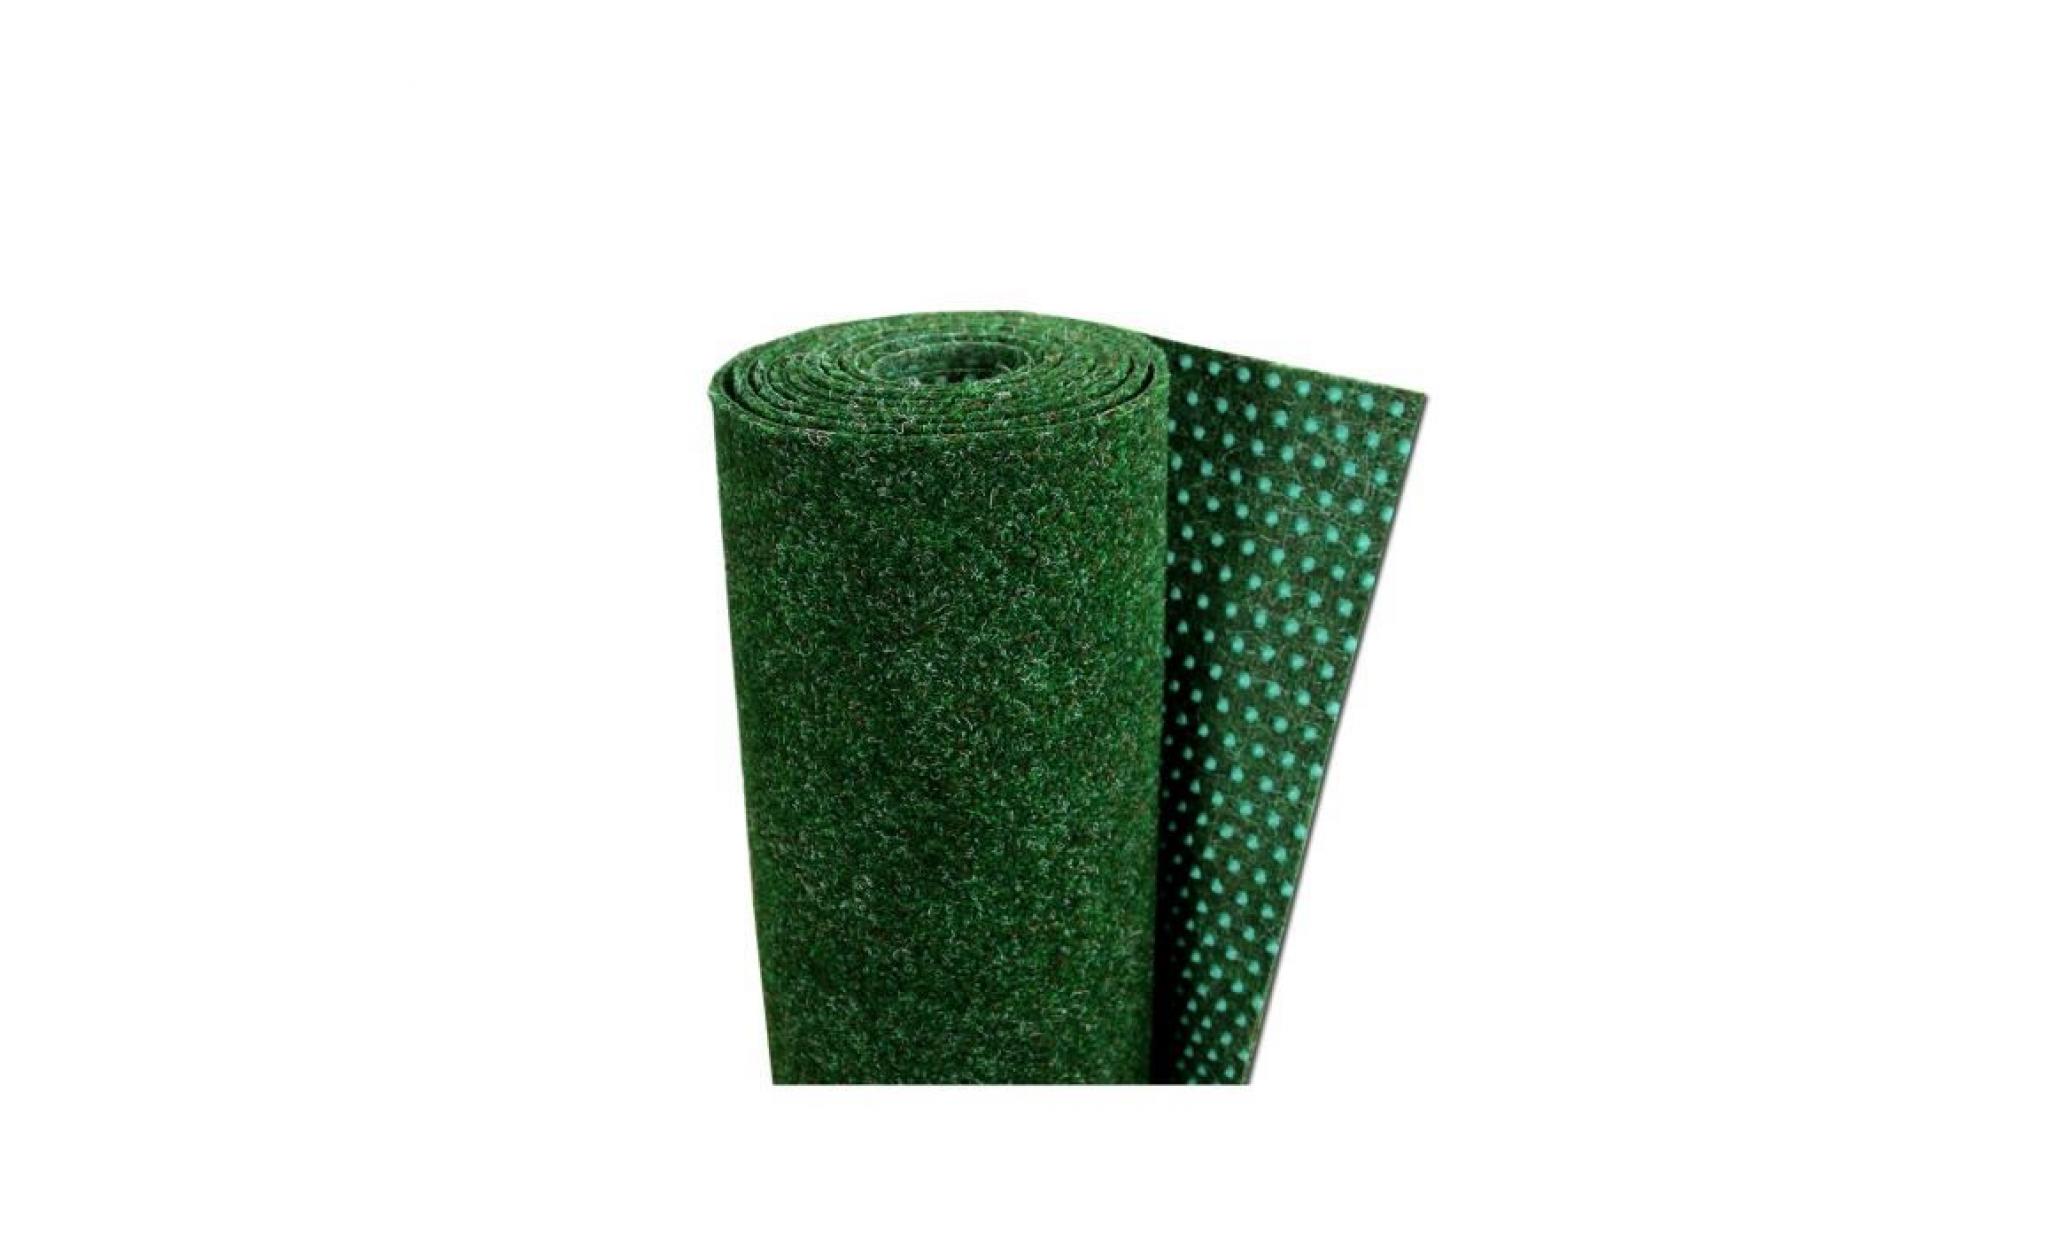 kingston   tapis type gazon artificiel – pour jardin, terrasse, balcon   beige [200x250 cm] pas cher